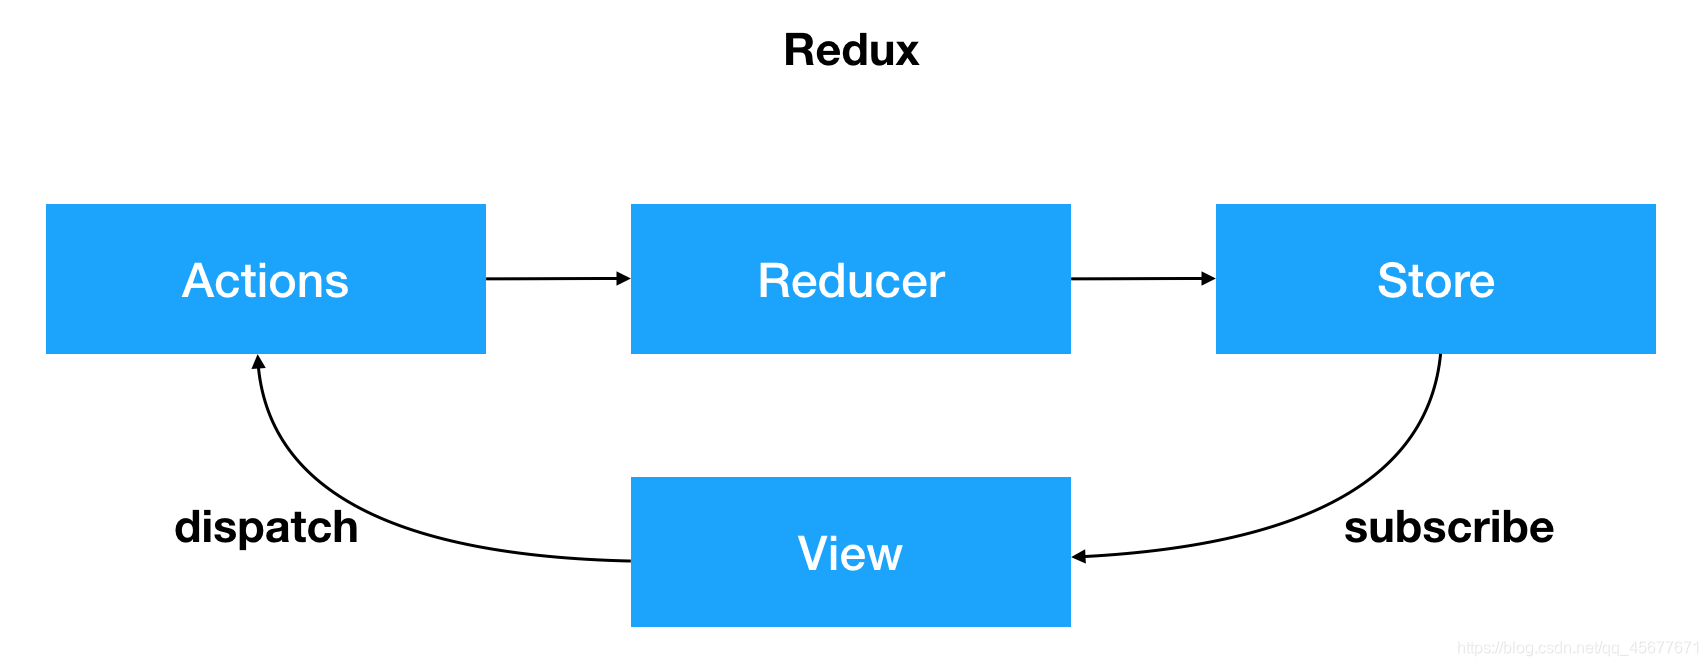 【Redux】简解及工作流程分析